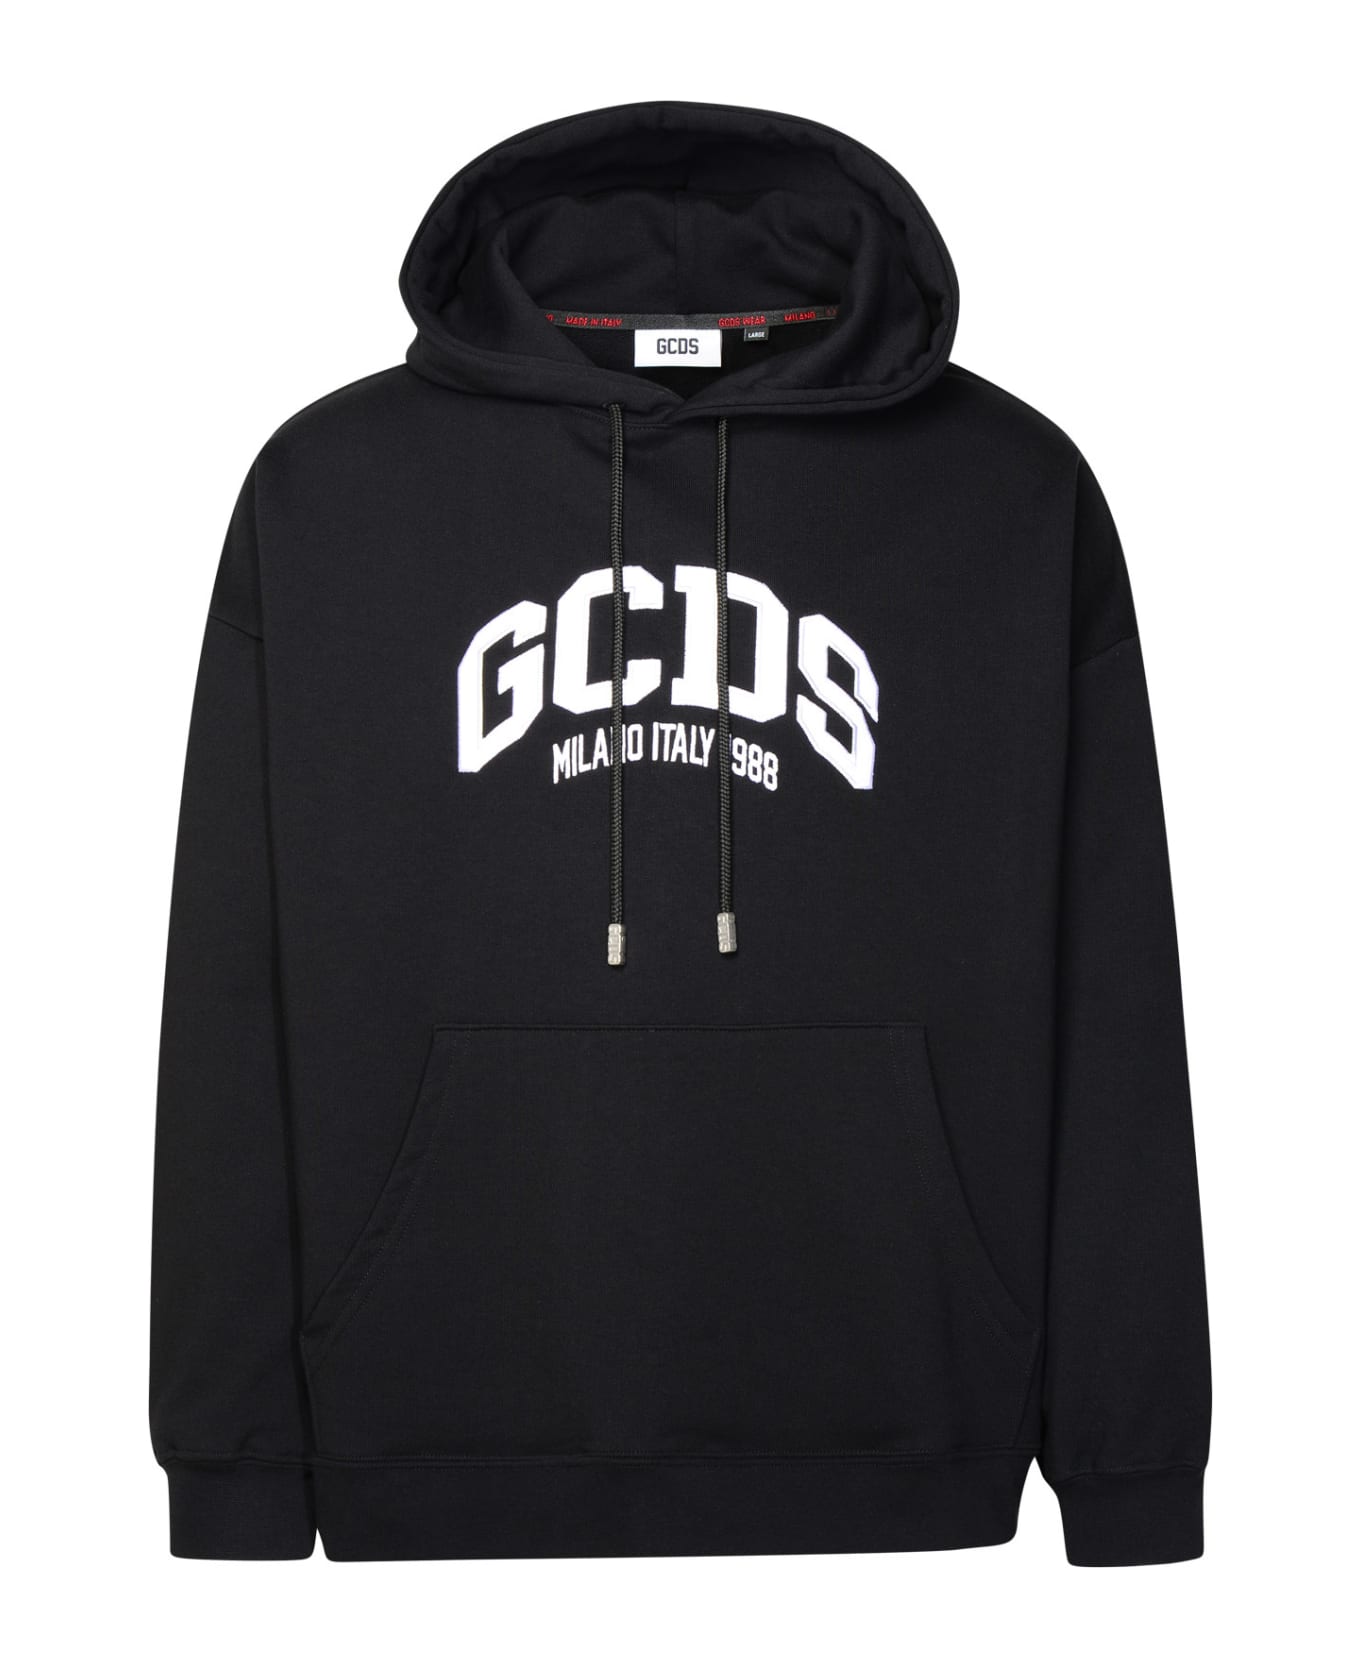 GCDS Black Cotton Sweatshirt - Black